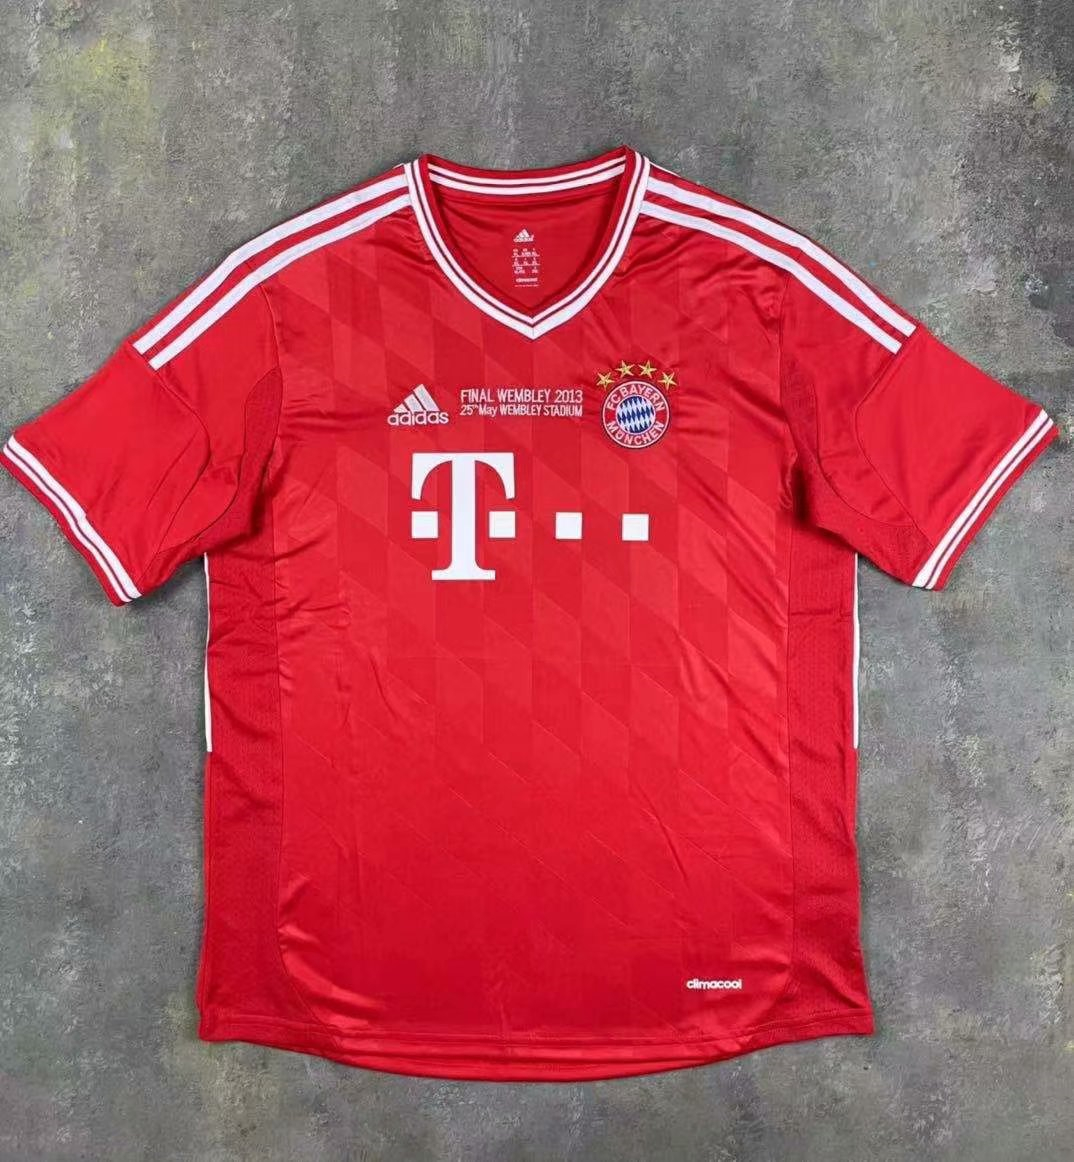 2013/14 Bayern Munich Retro Soccer Jersey Home Replica Mens